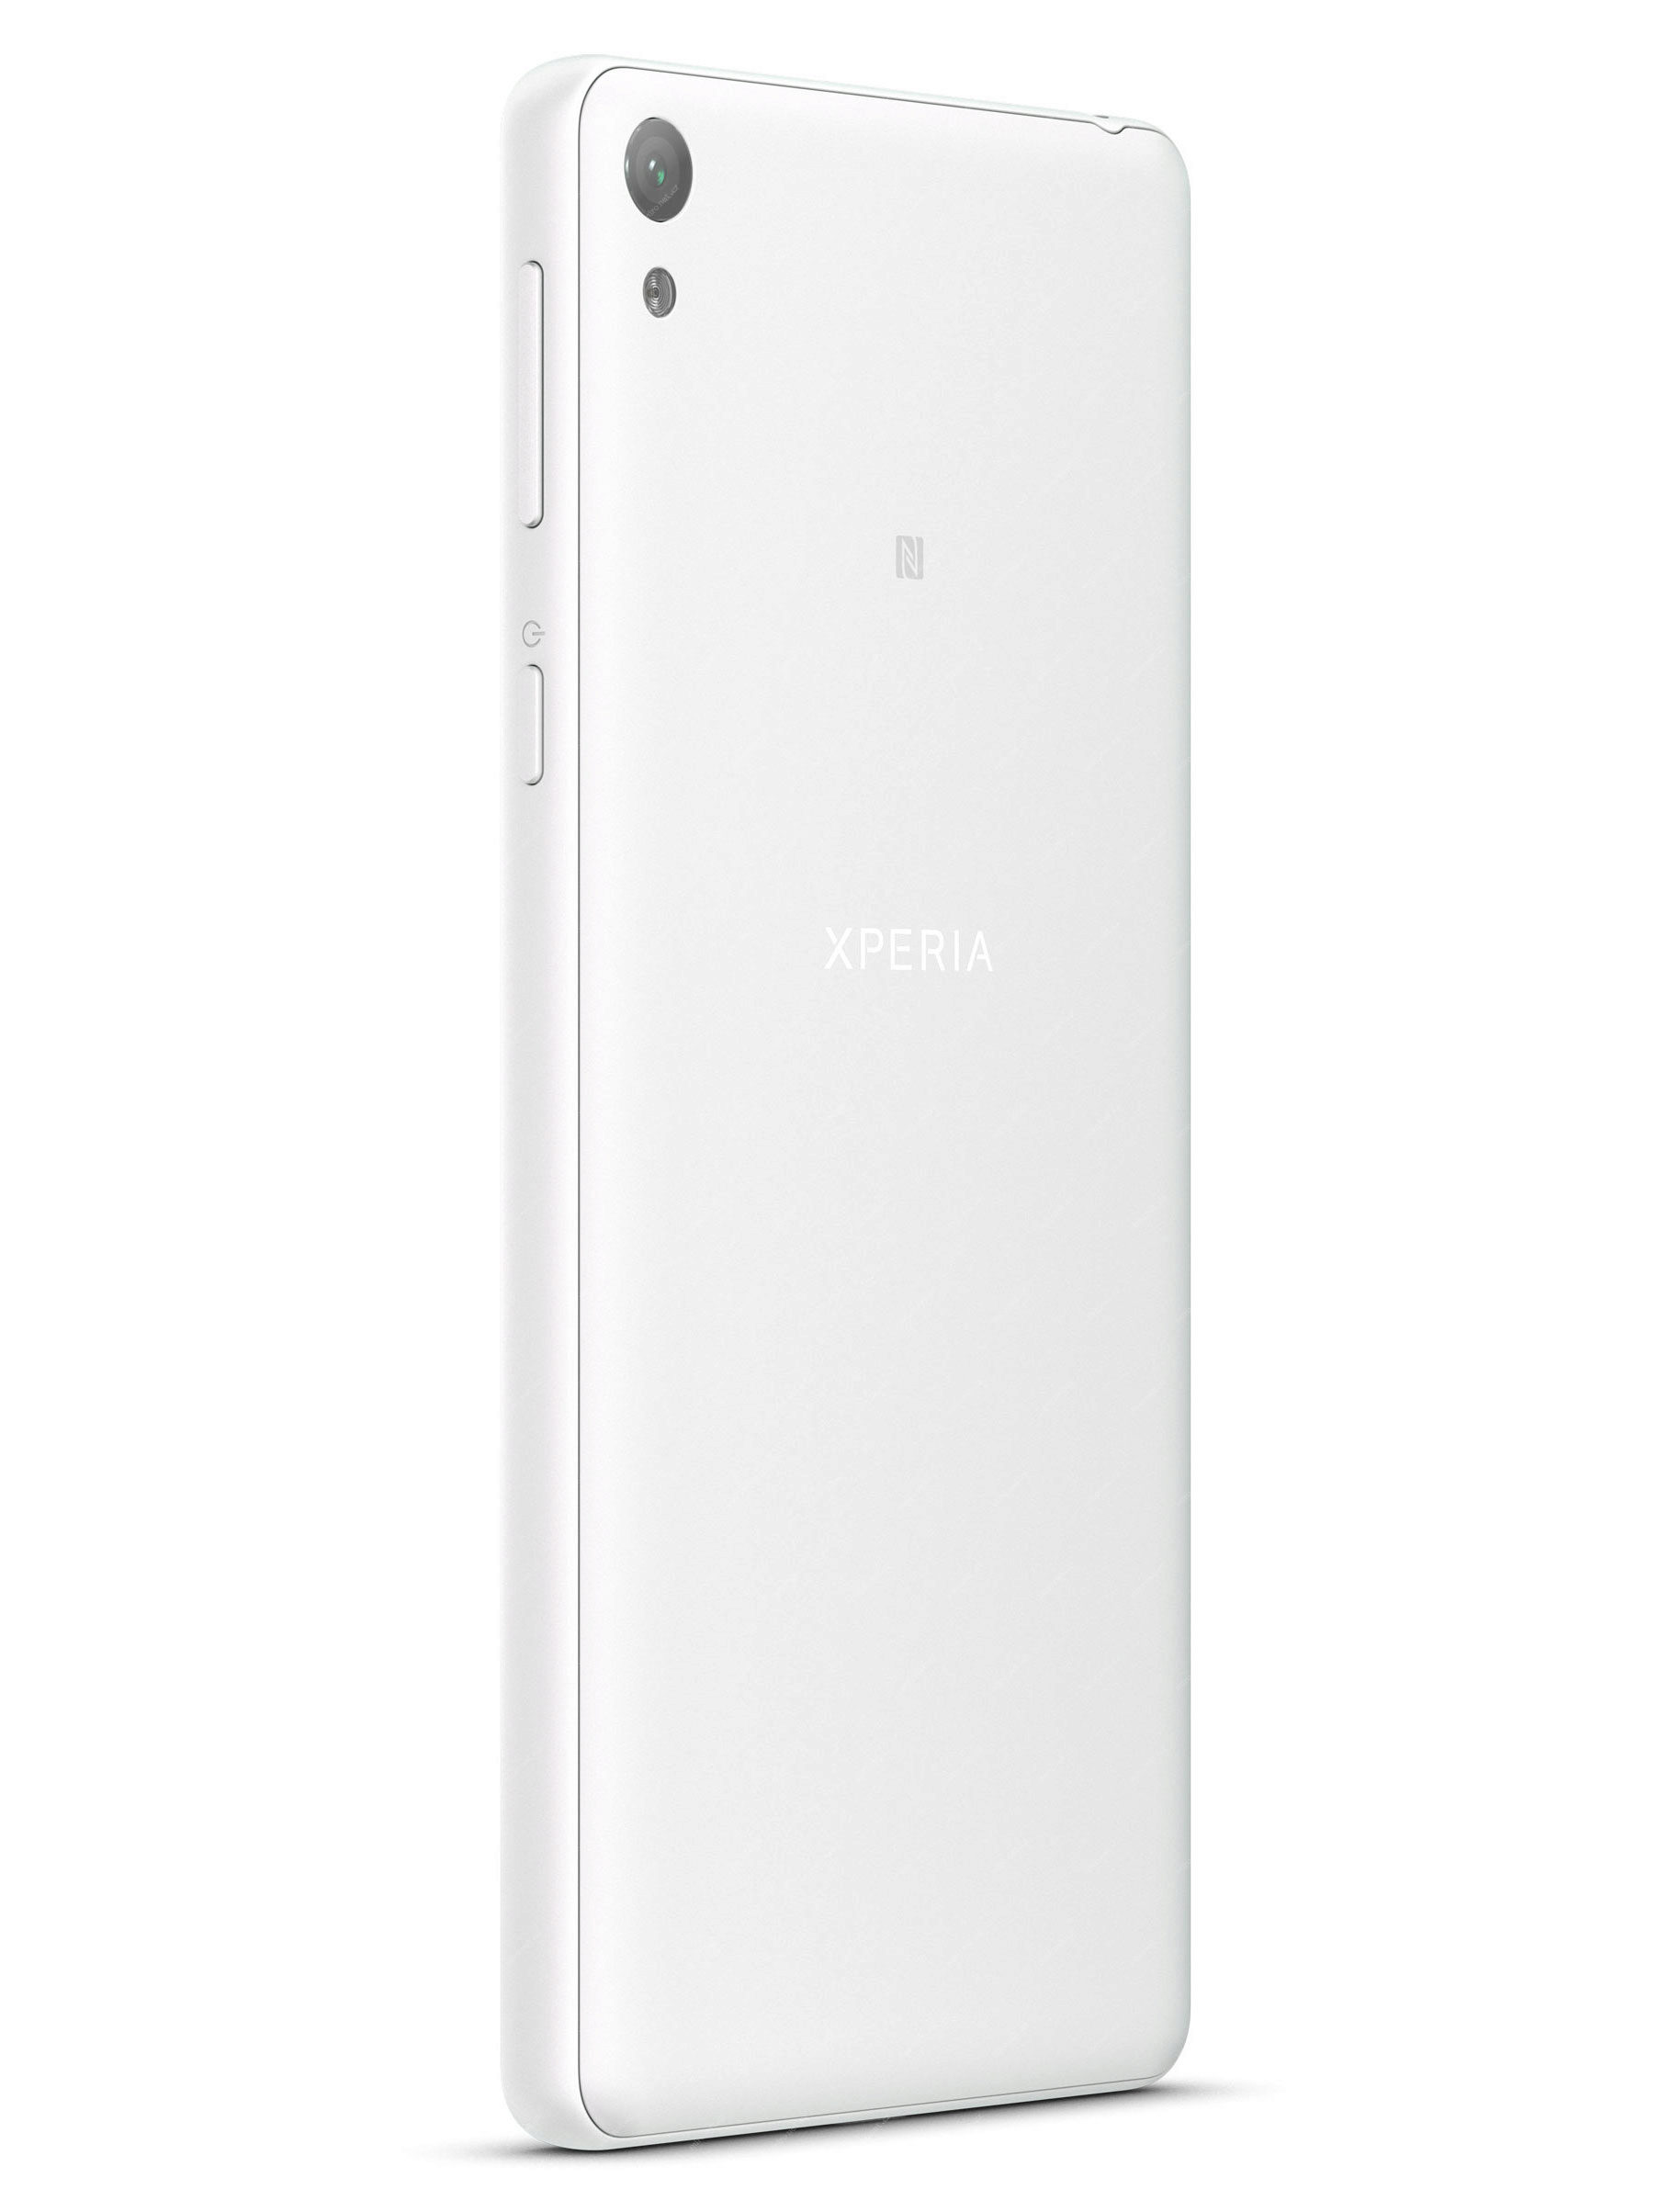 Sony xperia f3311